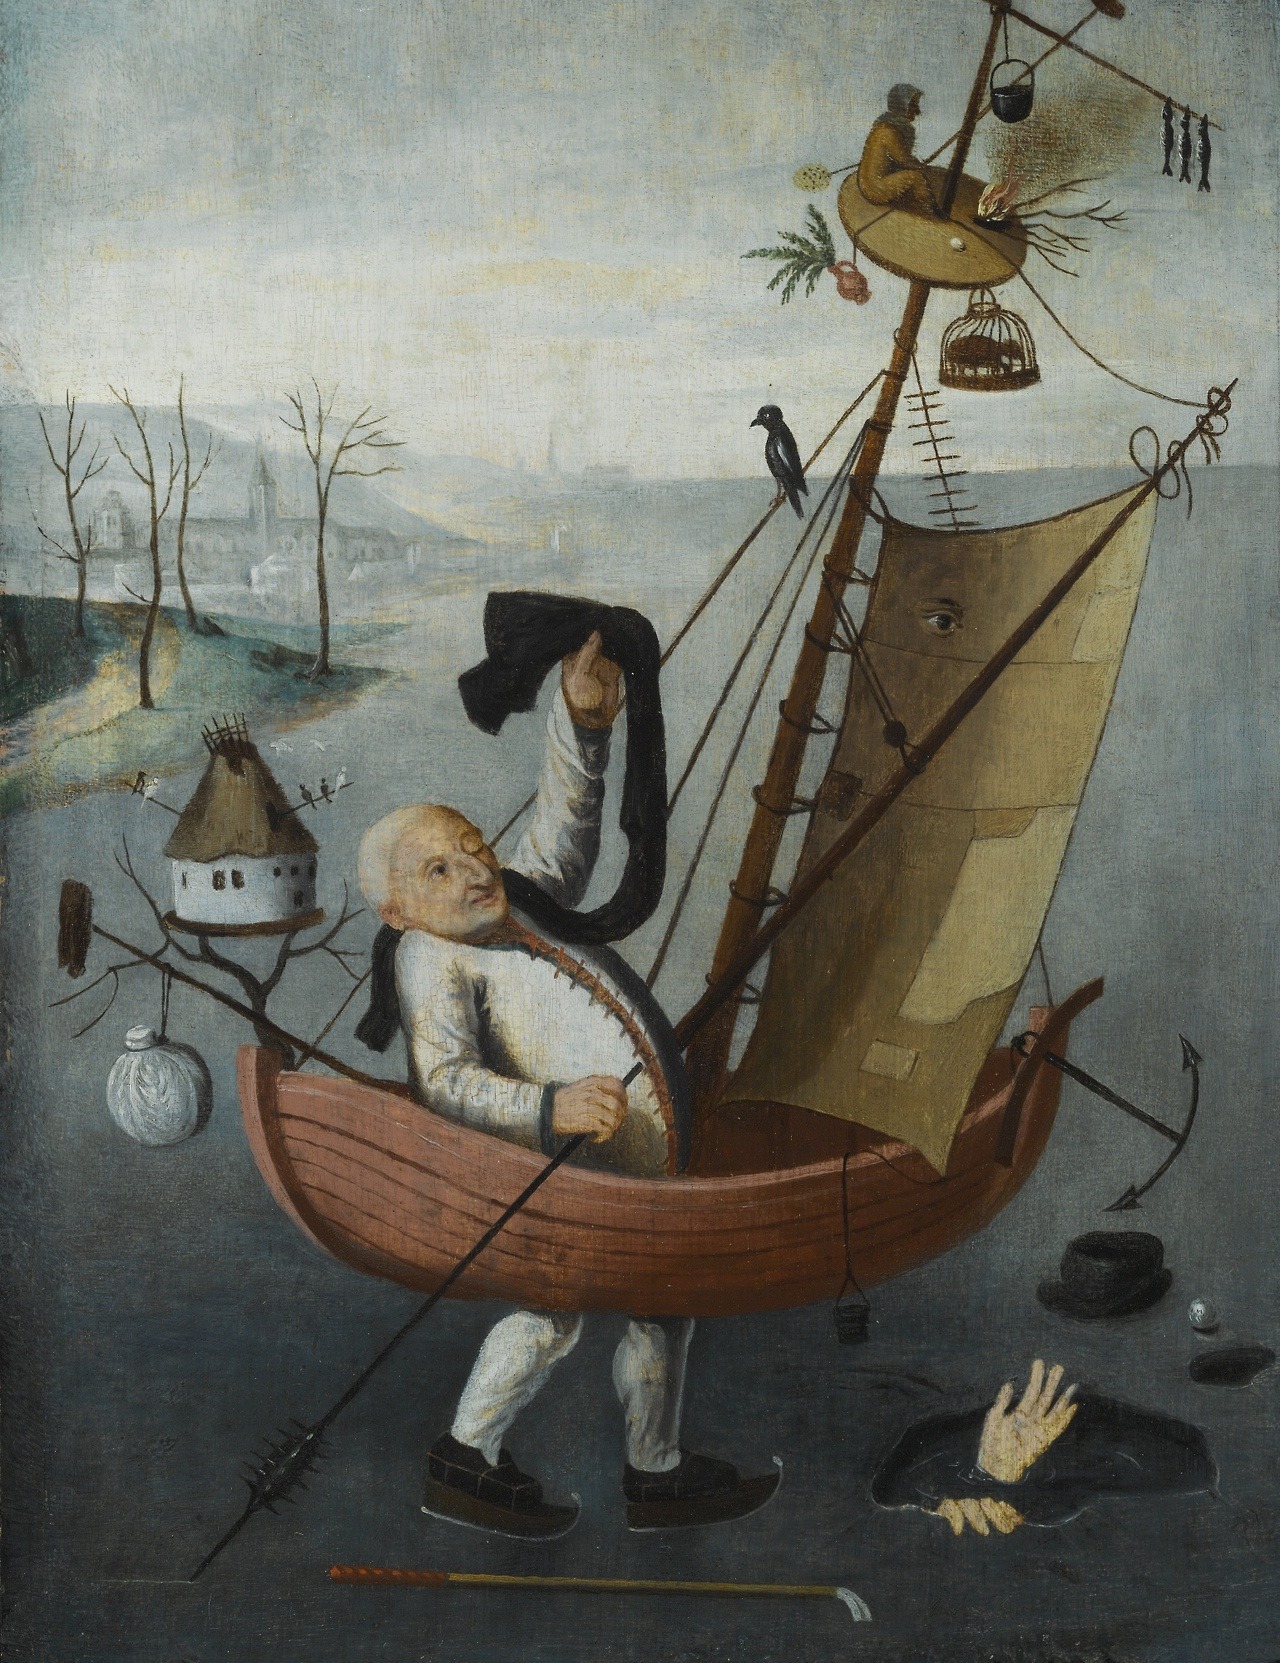 The Fool’s Ship - Hieronymus Bosch (1545-50).jpg